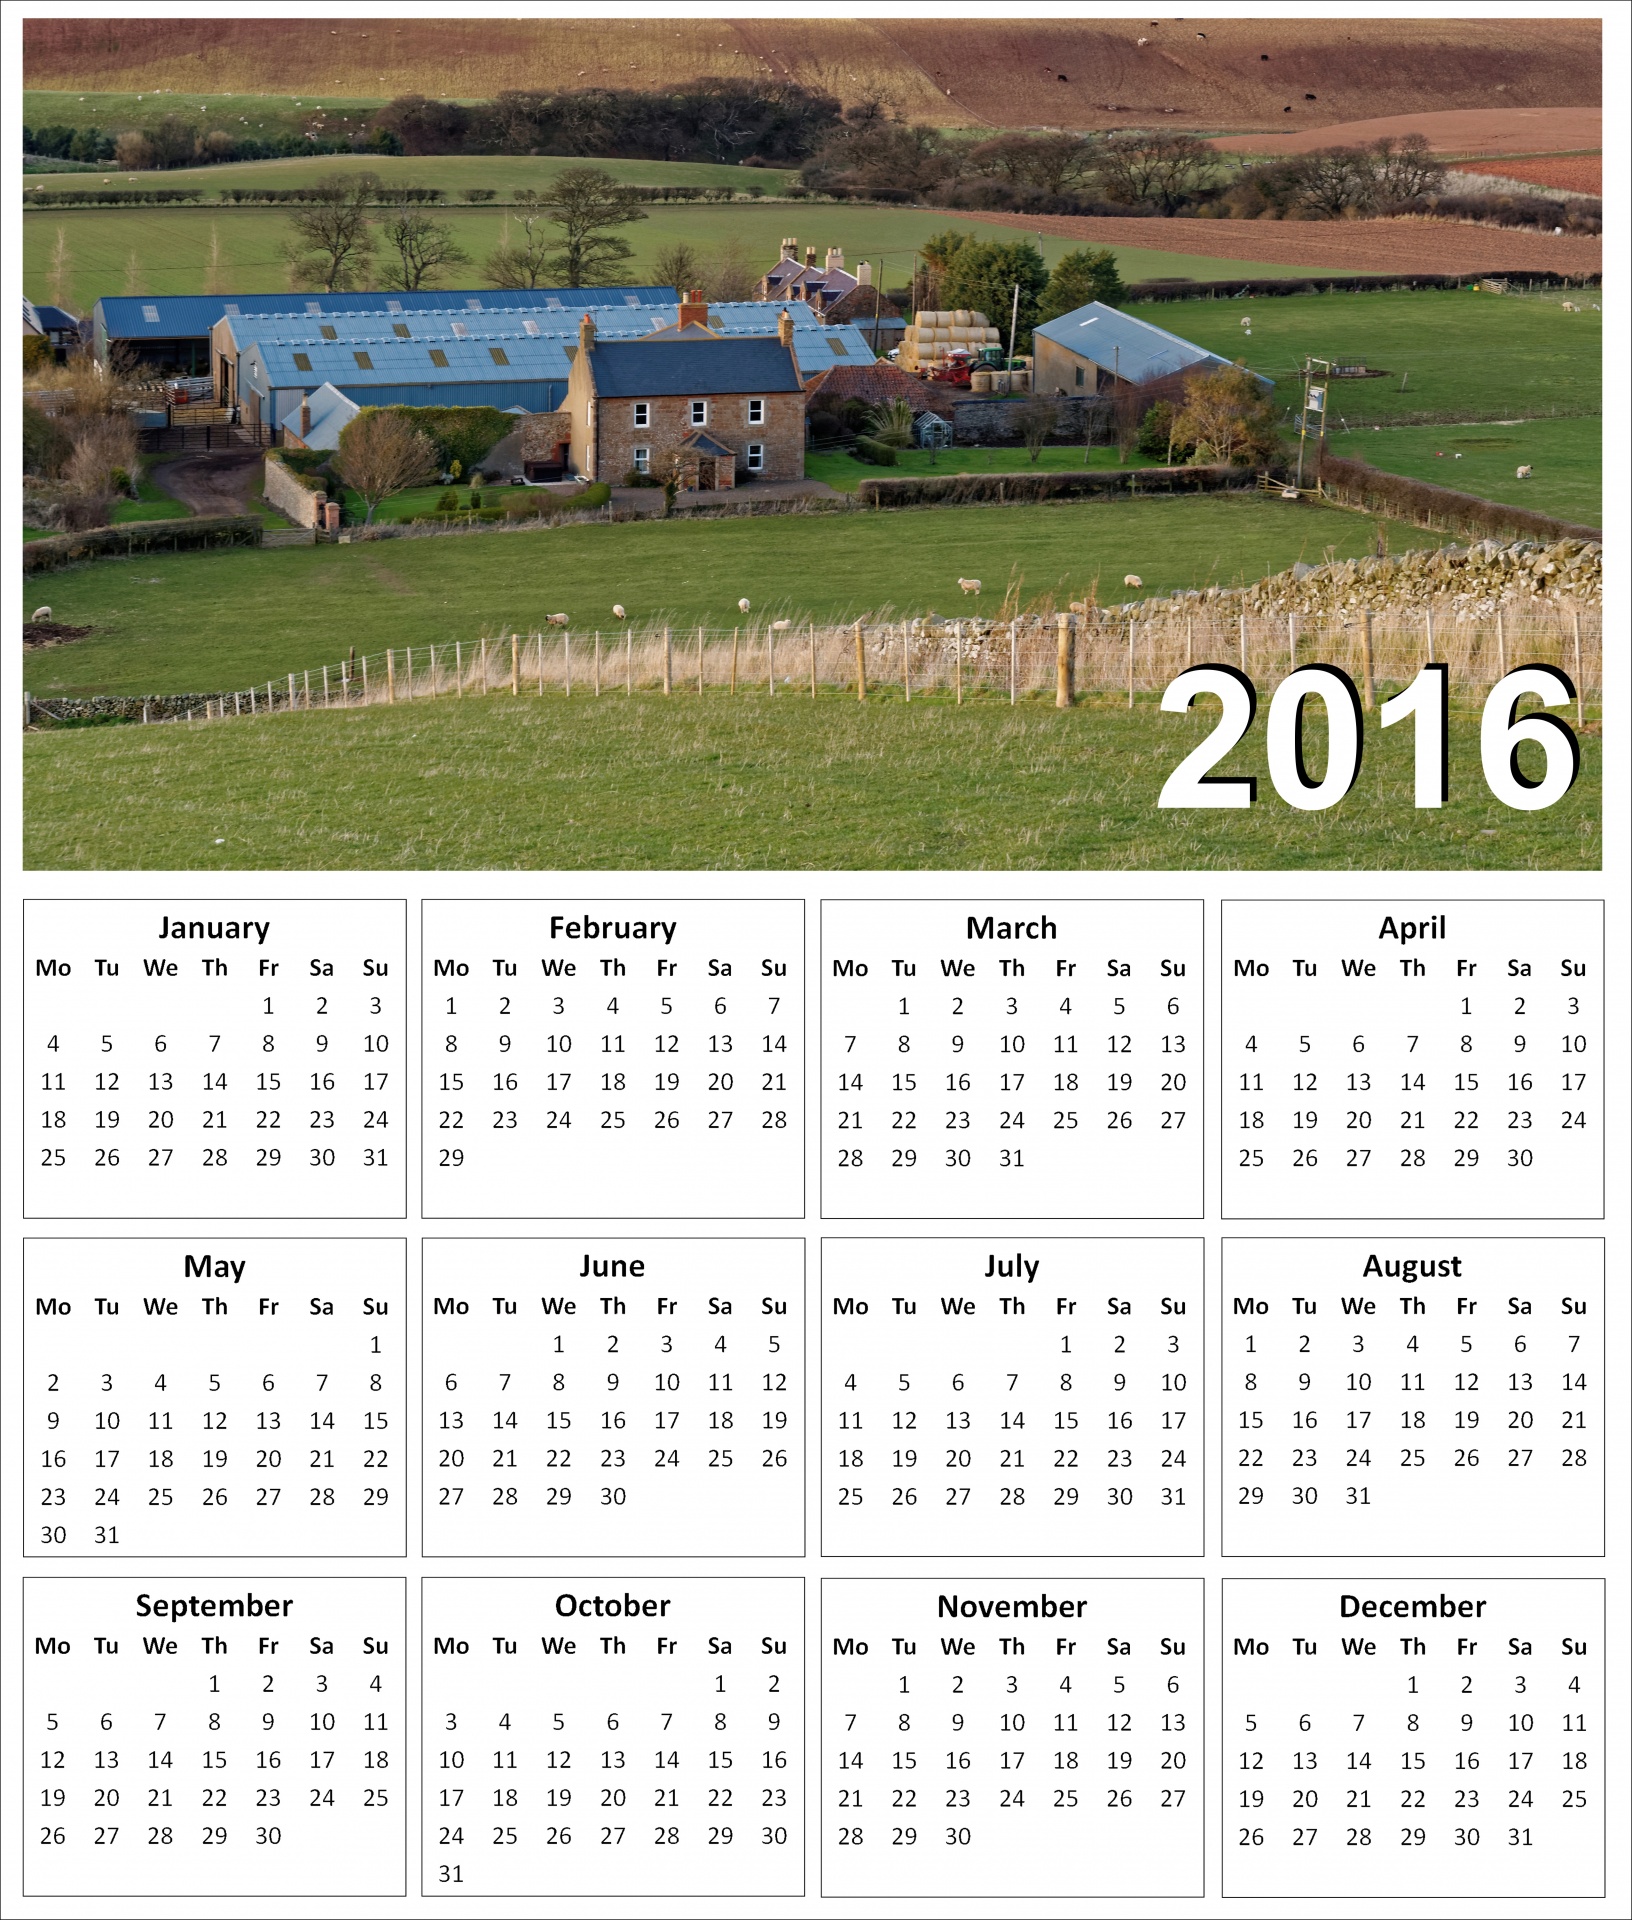 2016 Farm Calendar